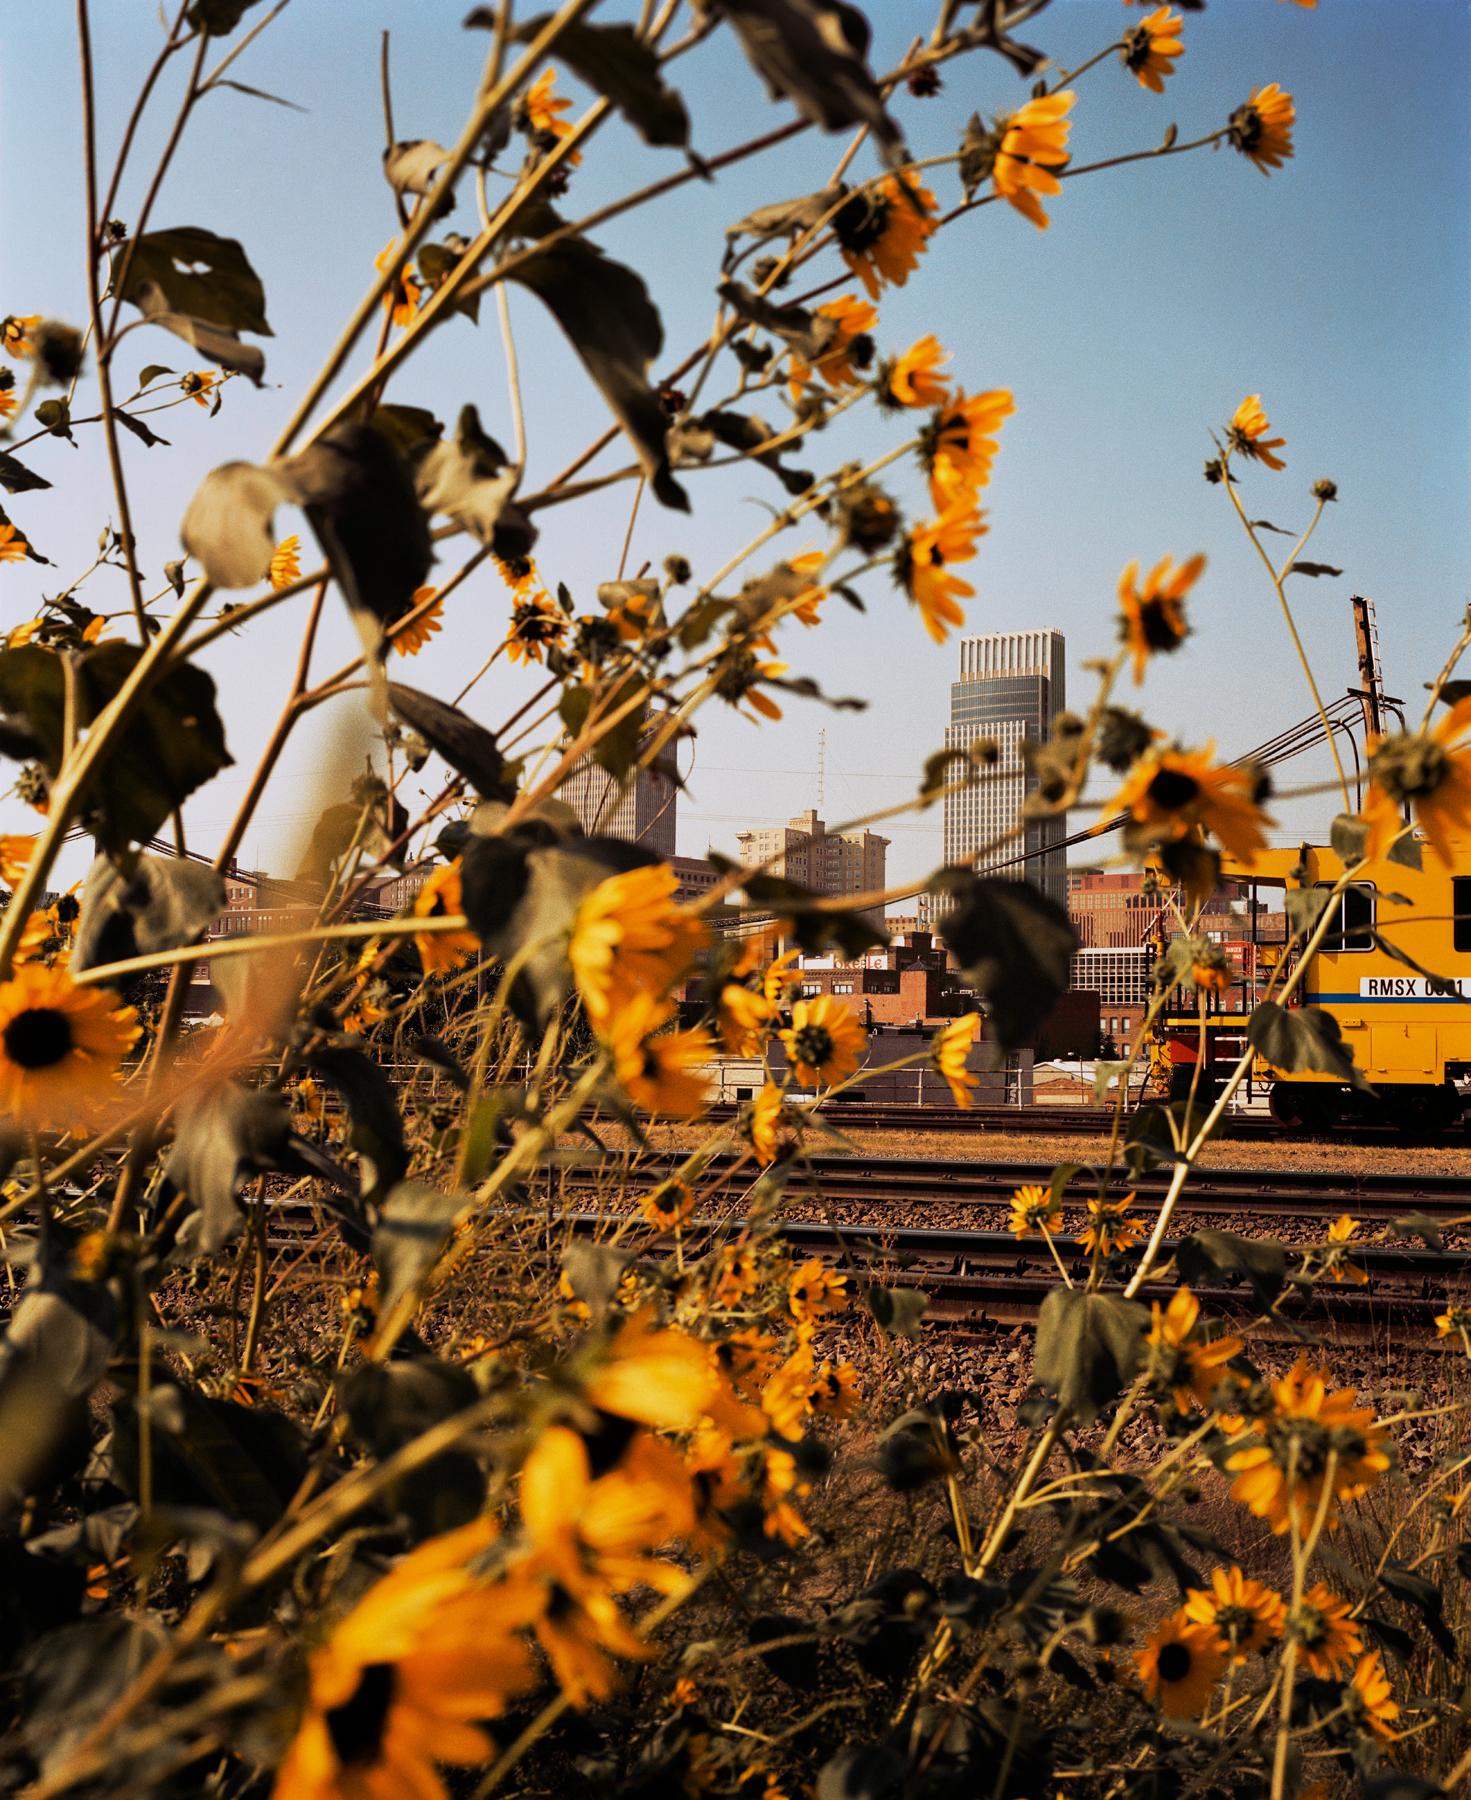 Gregory Halpern Color Photograph - Omaha Sketchbook: Omaha, NE (Downtown Through Sunflowers) - Photography